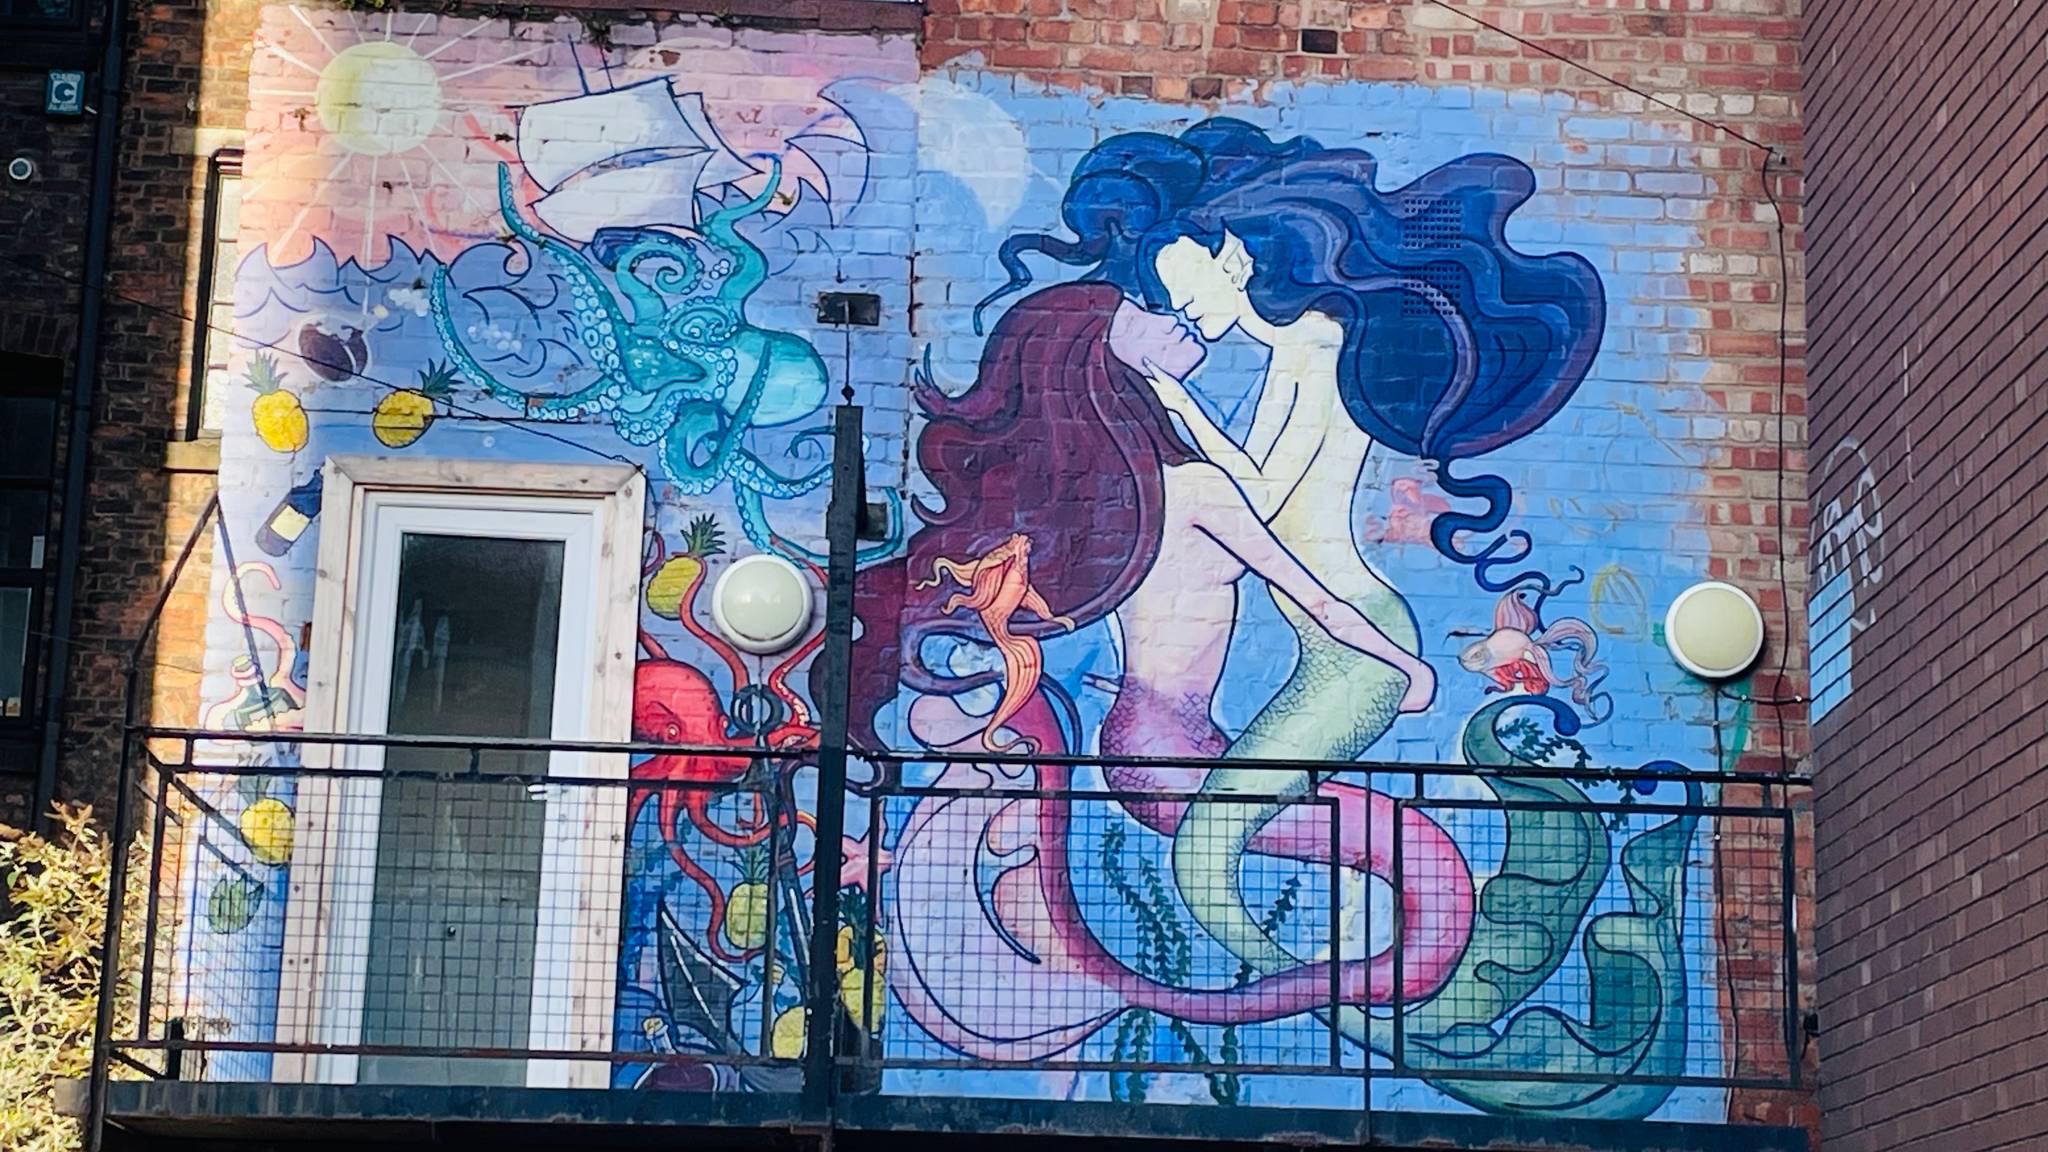 Unknown - Liverpool&mdash;Mermaids Kissing